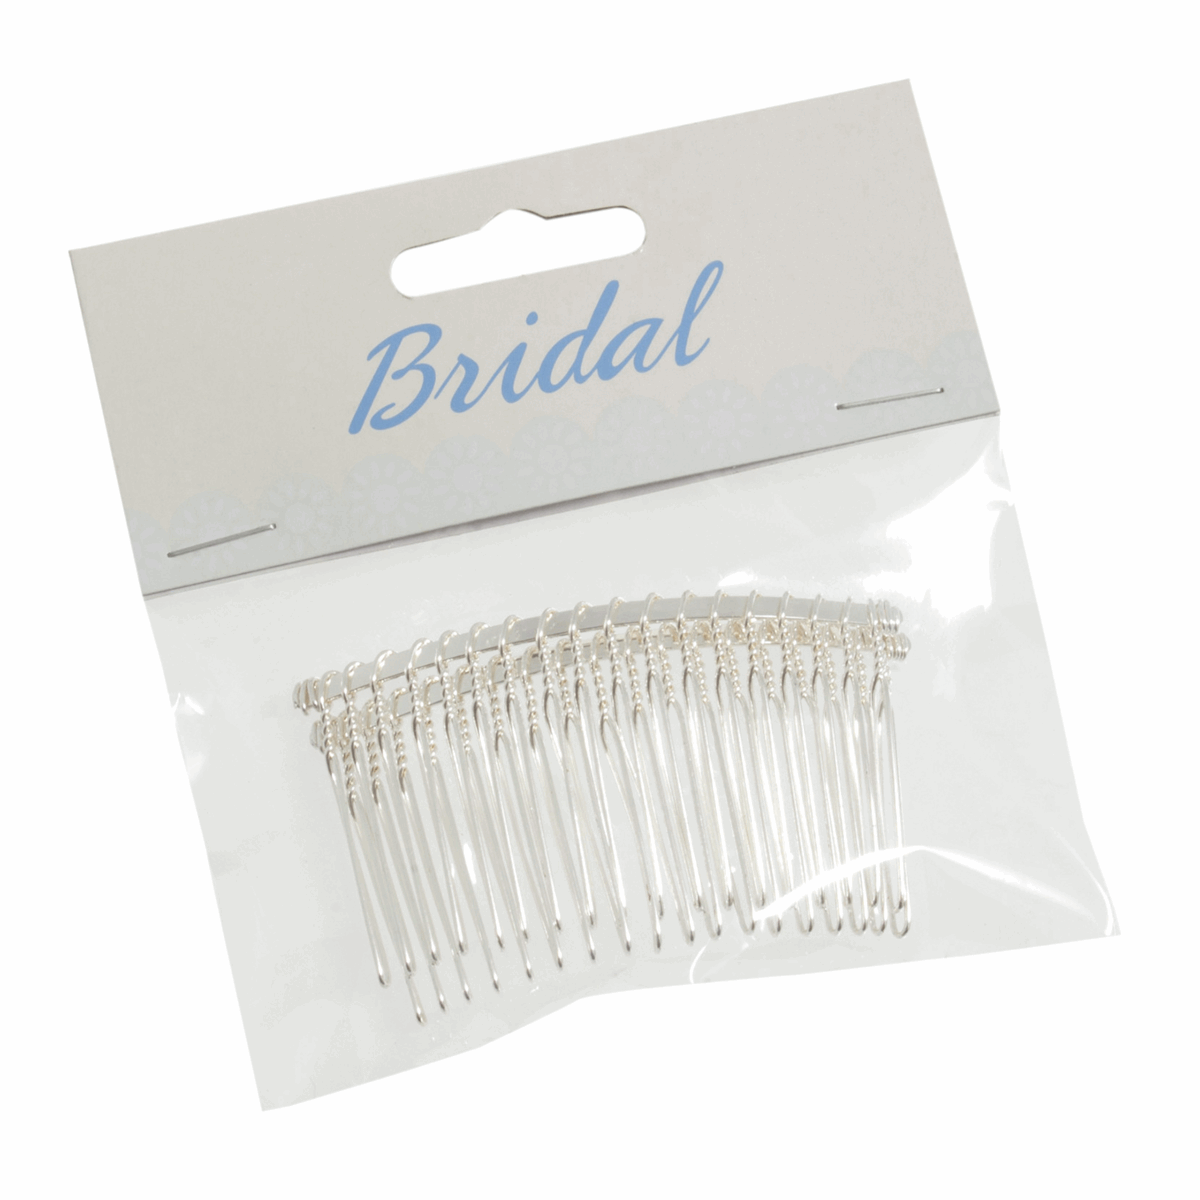 Bridal Silver Metal Hair Comb Slides - 7 x 3.5cm (Pack of 2)